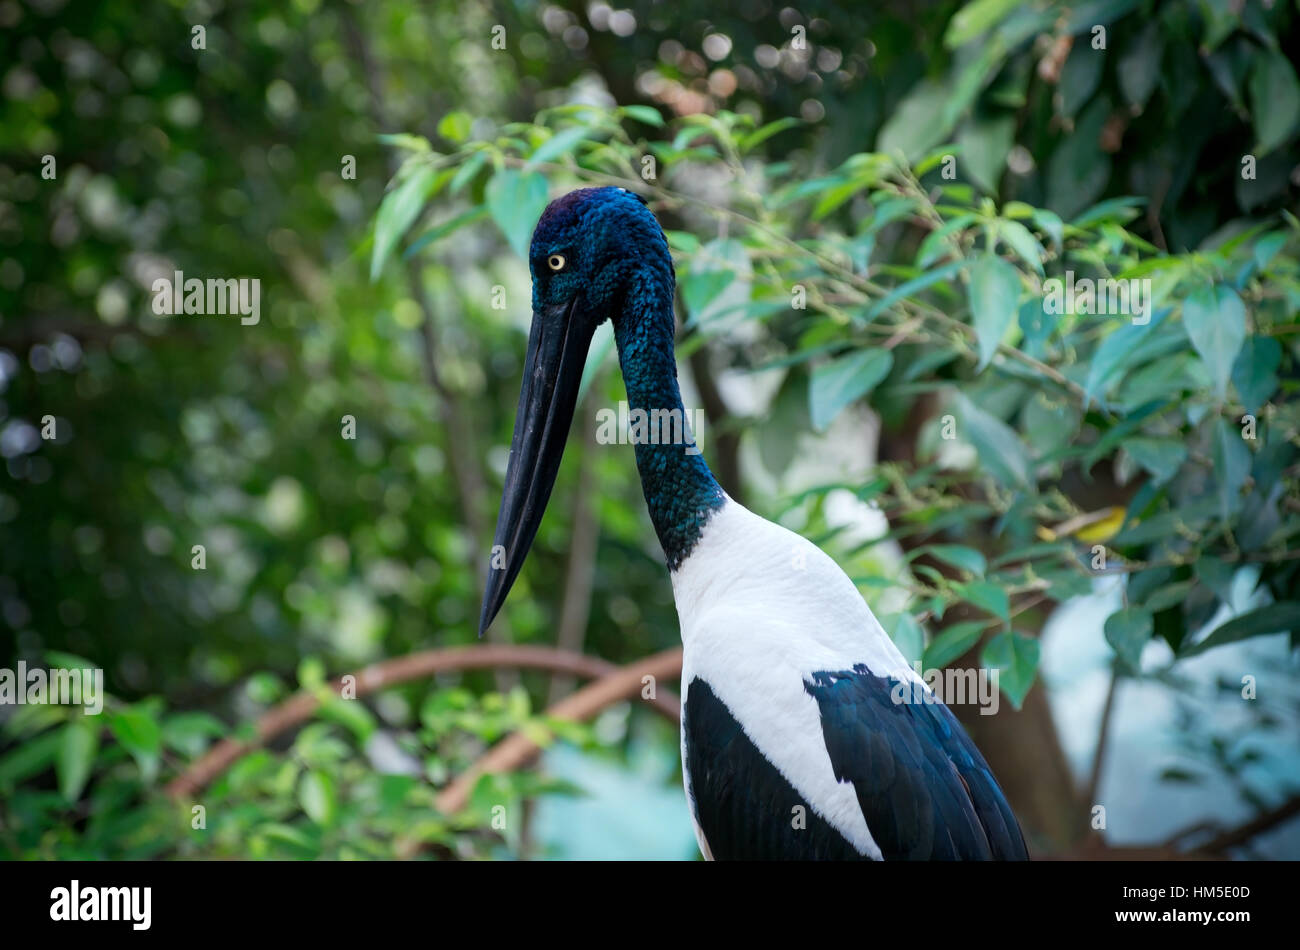 side view or profile of black-necked stork or ephippiorhynchus asiaticus australis bird against lush forest habitat Stock Photo